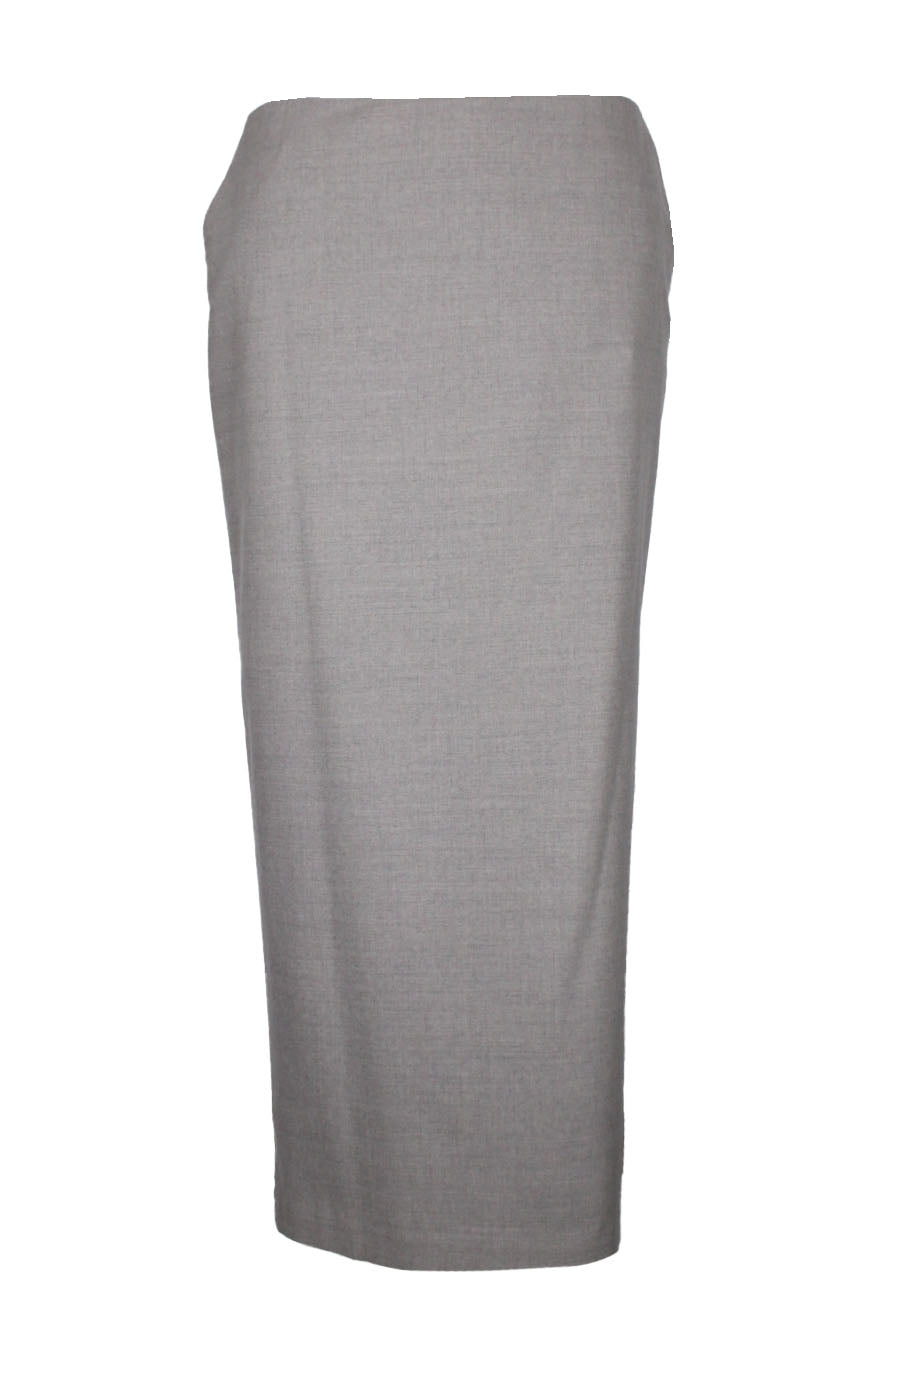 description: vintage fabiana flippi grey maxi pencil skirt. features zipper closure at center back, two slit pockets at sides, and zipper closure slit at center back.